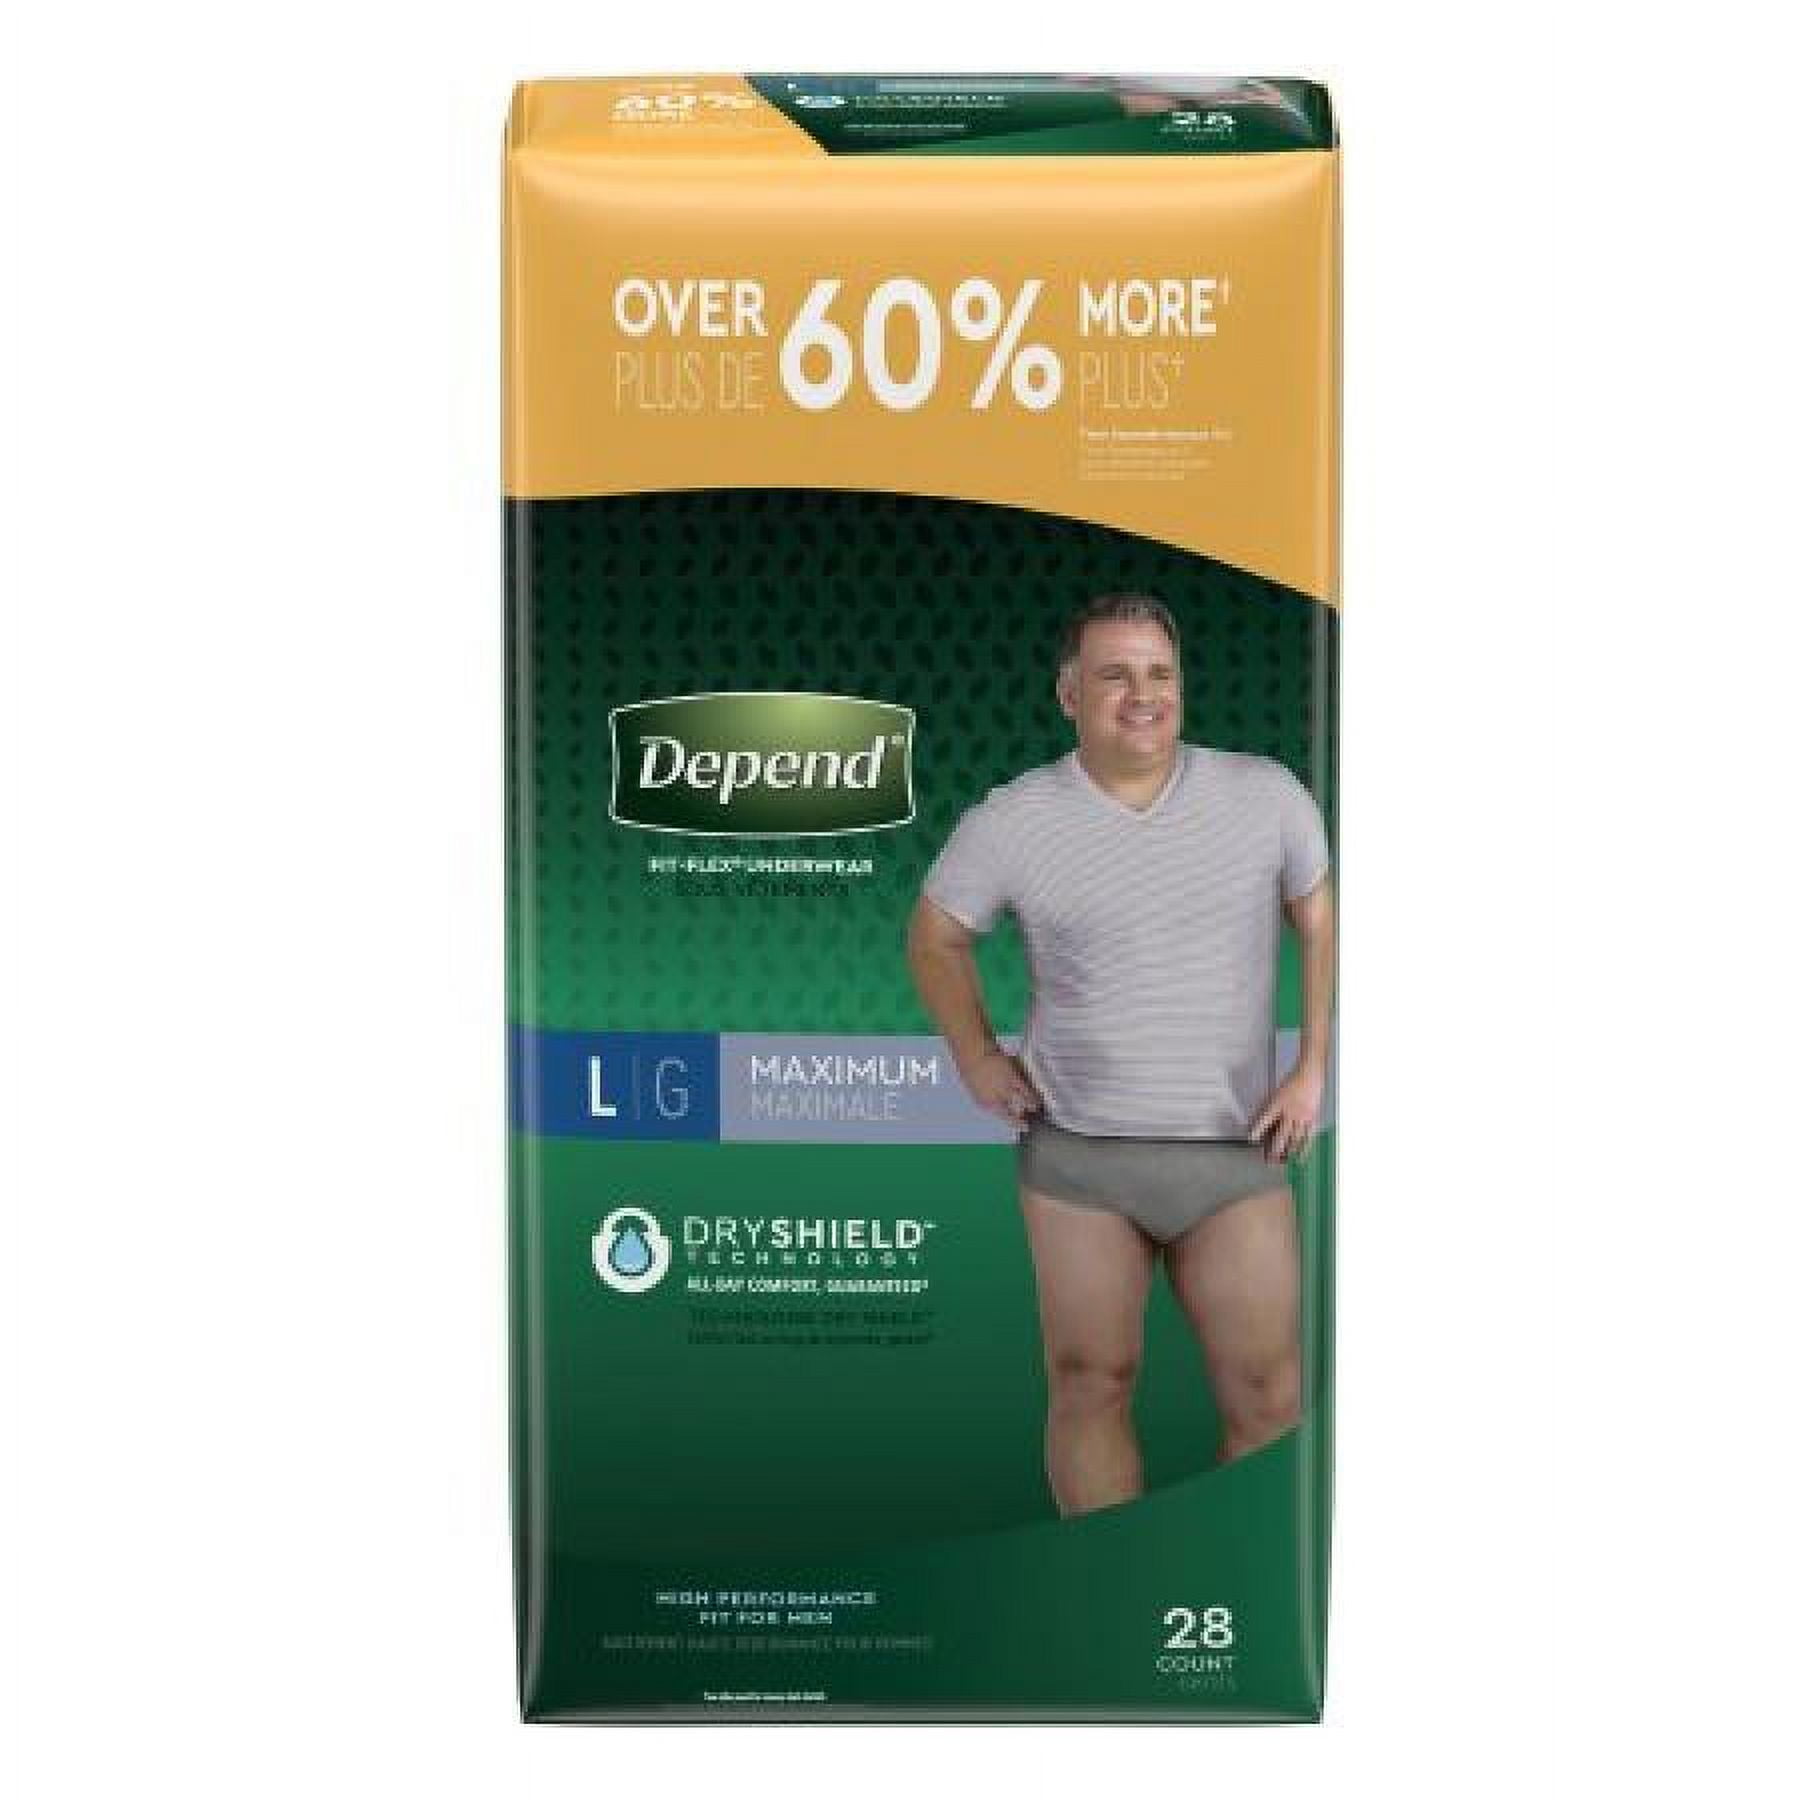 Depend Fit-Flex Underwear for Men, Heavy Absorbency, Large, 28 Count 